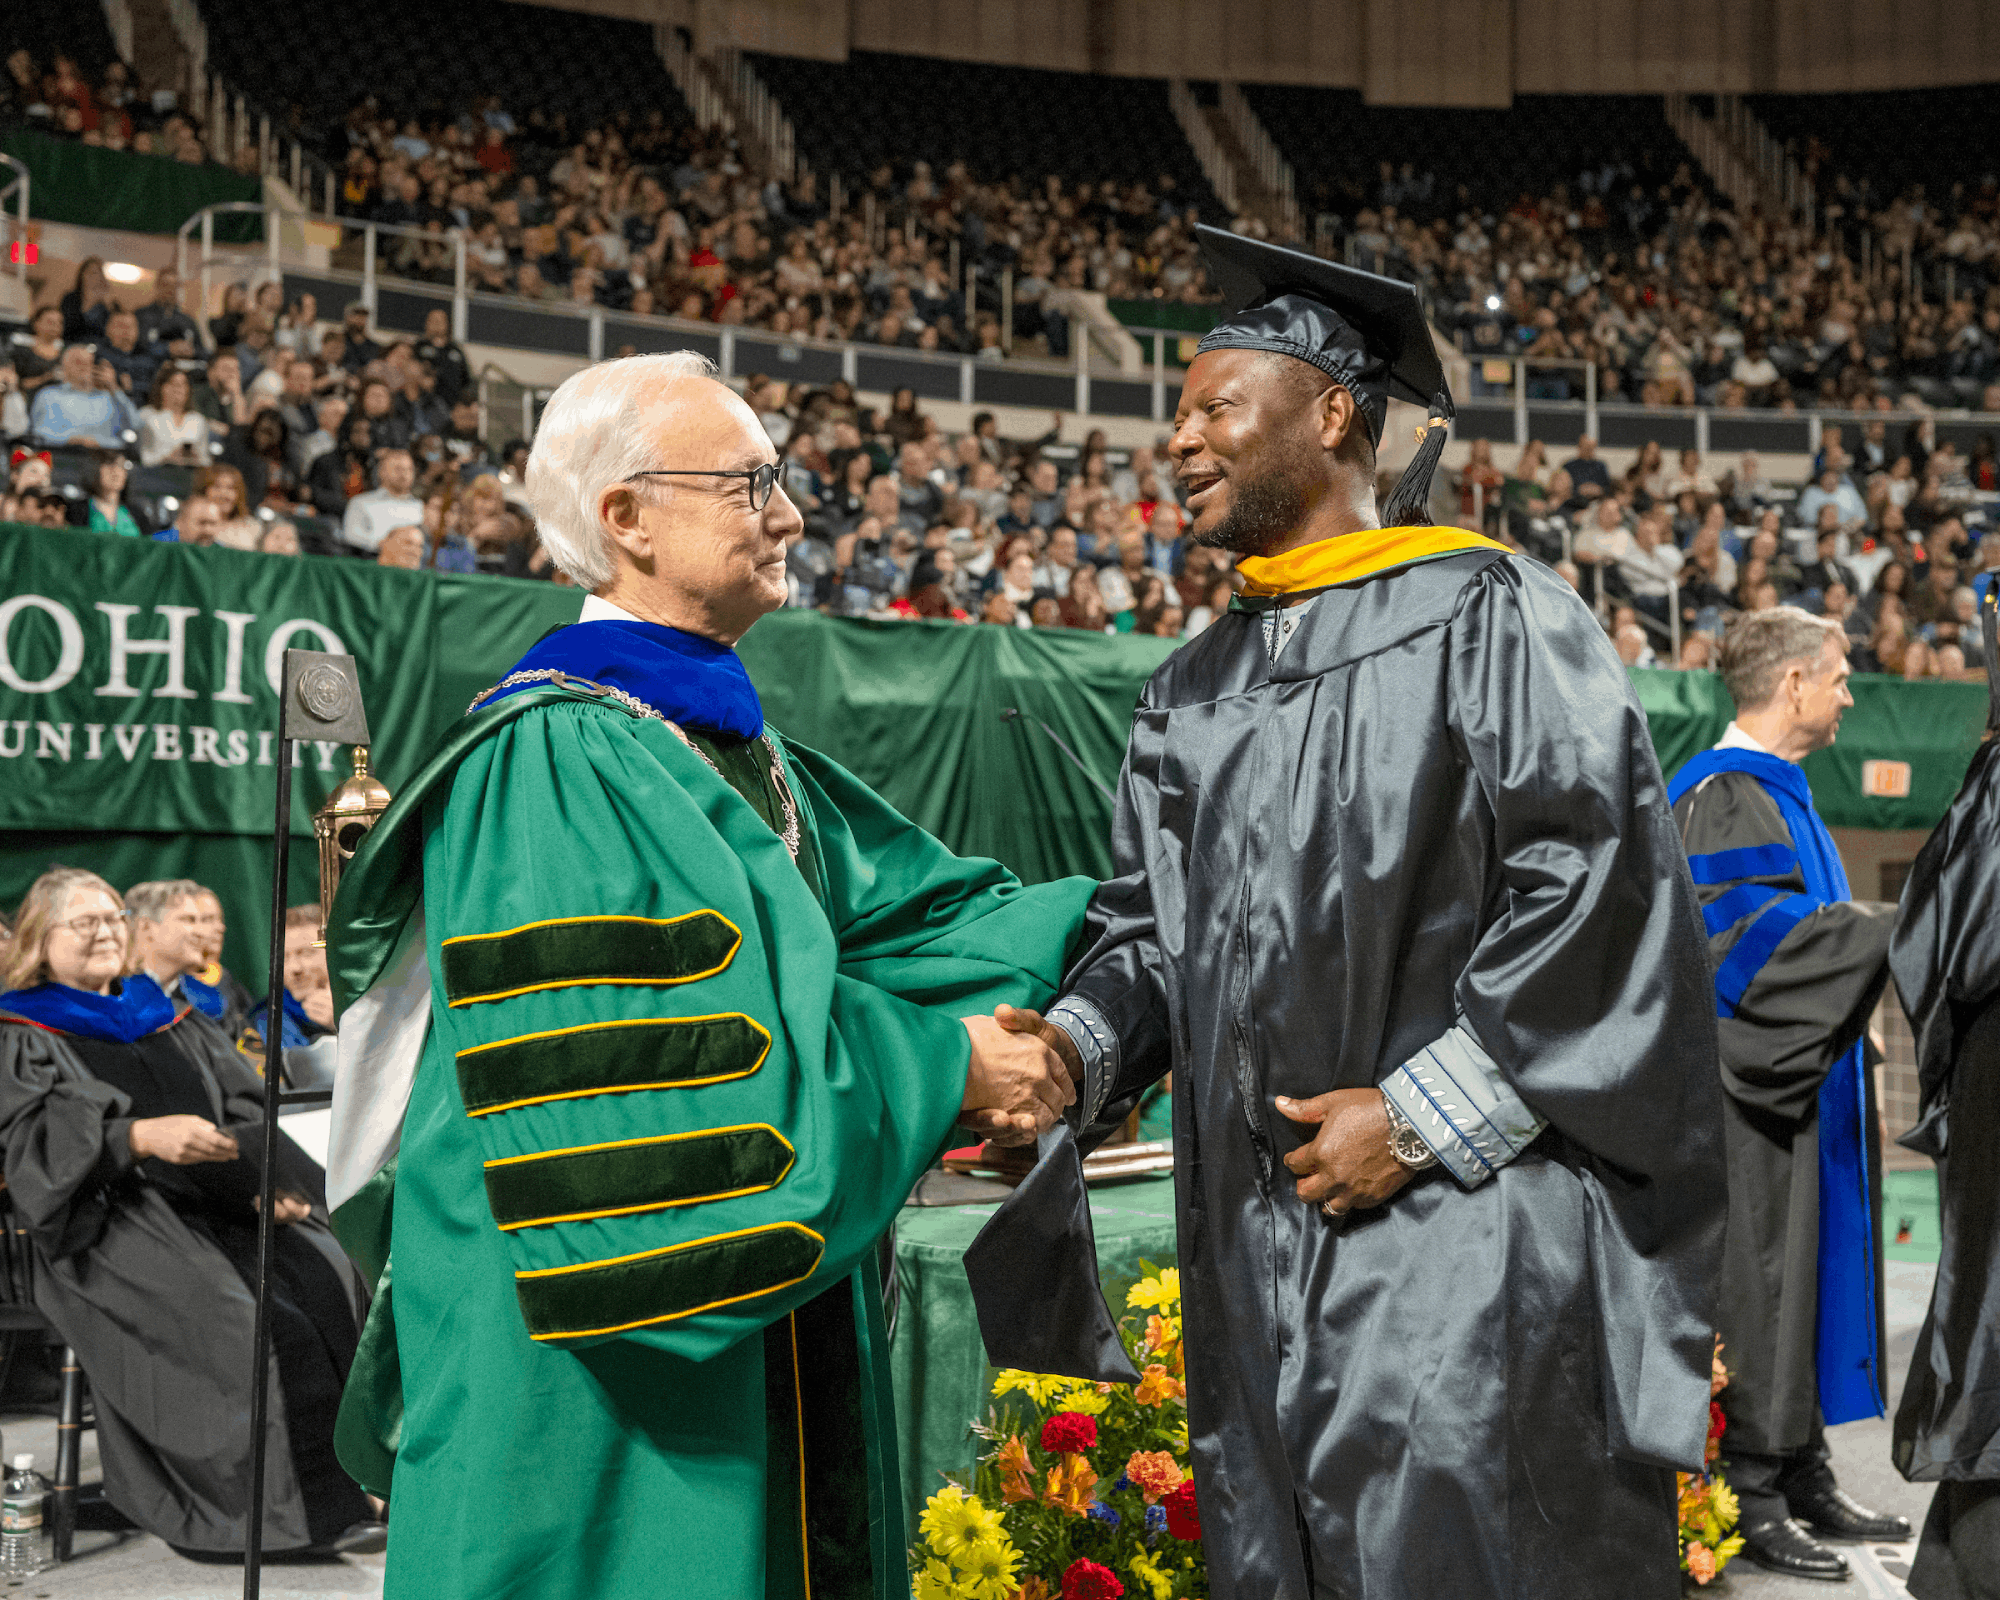 Ohio University President Hugh Sherman congratulates a graduate at Fall Commencement.